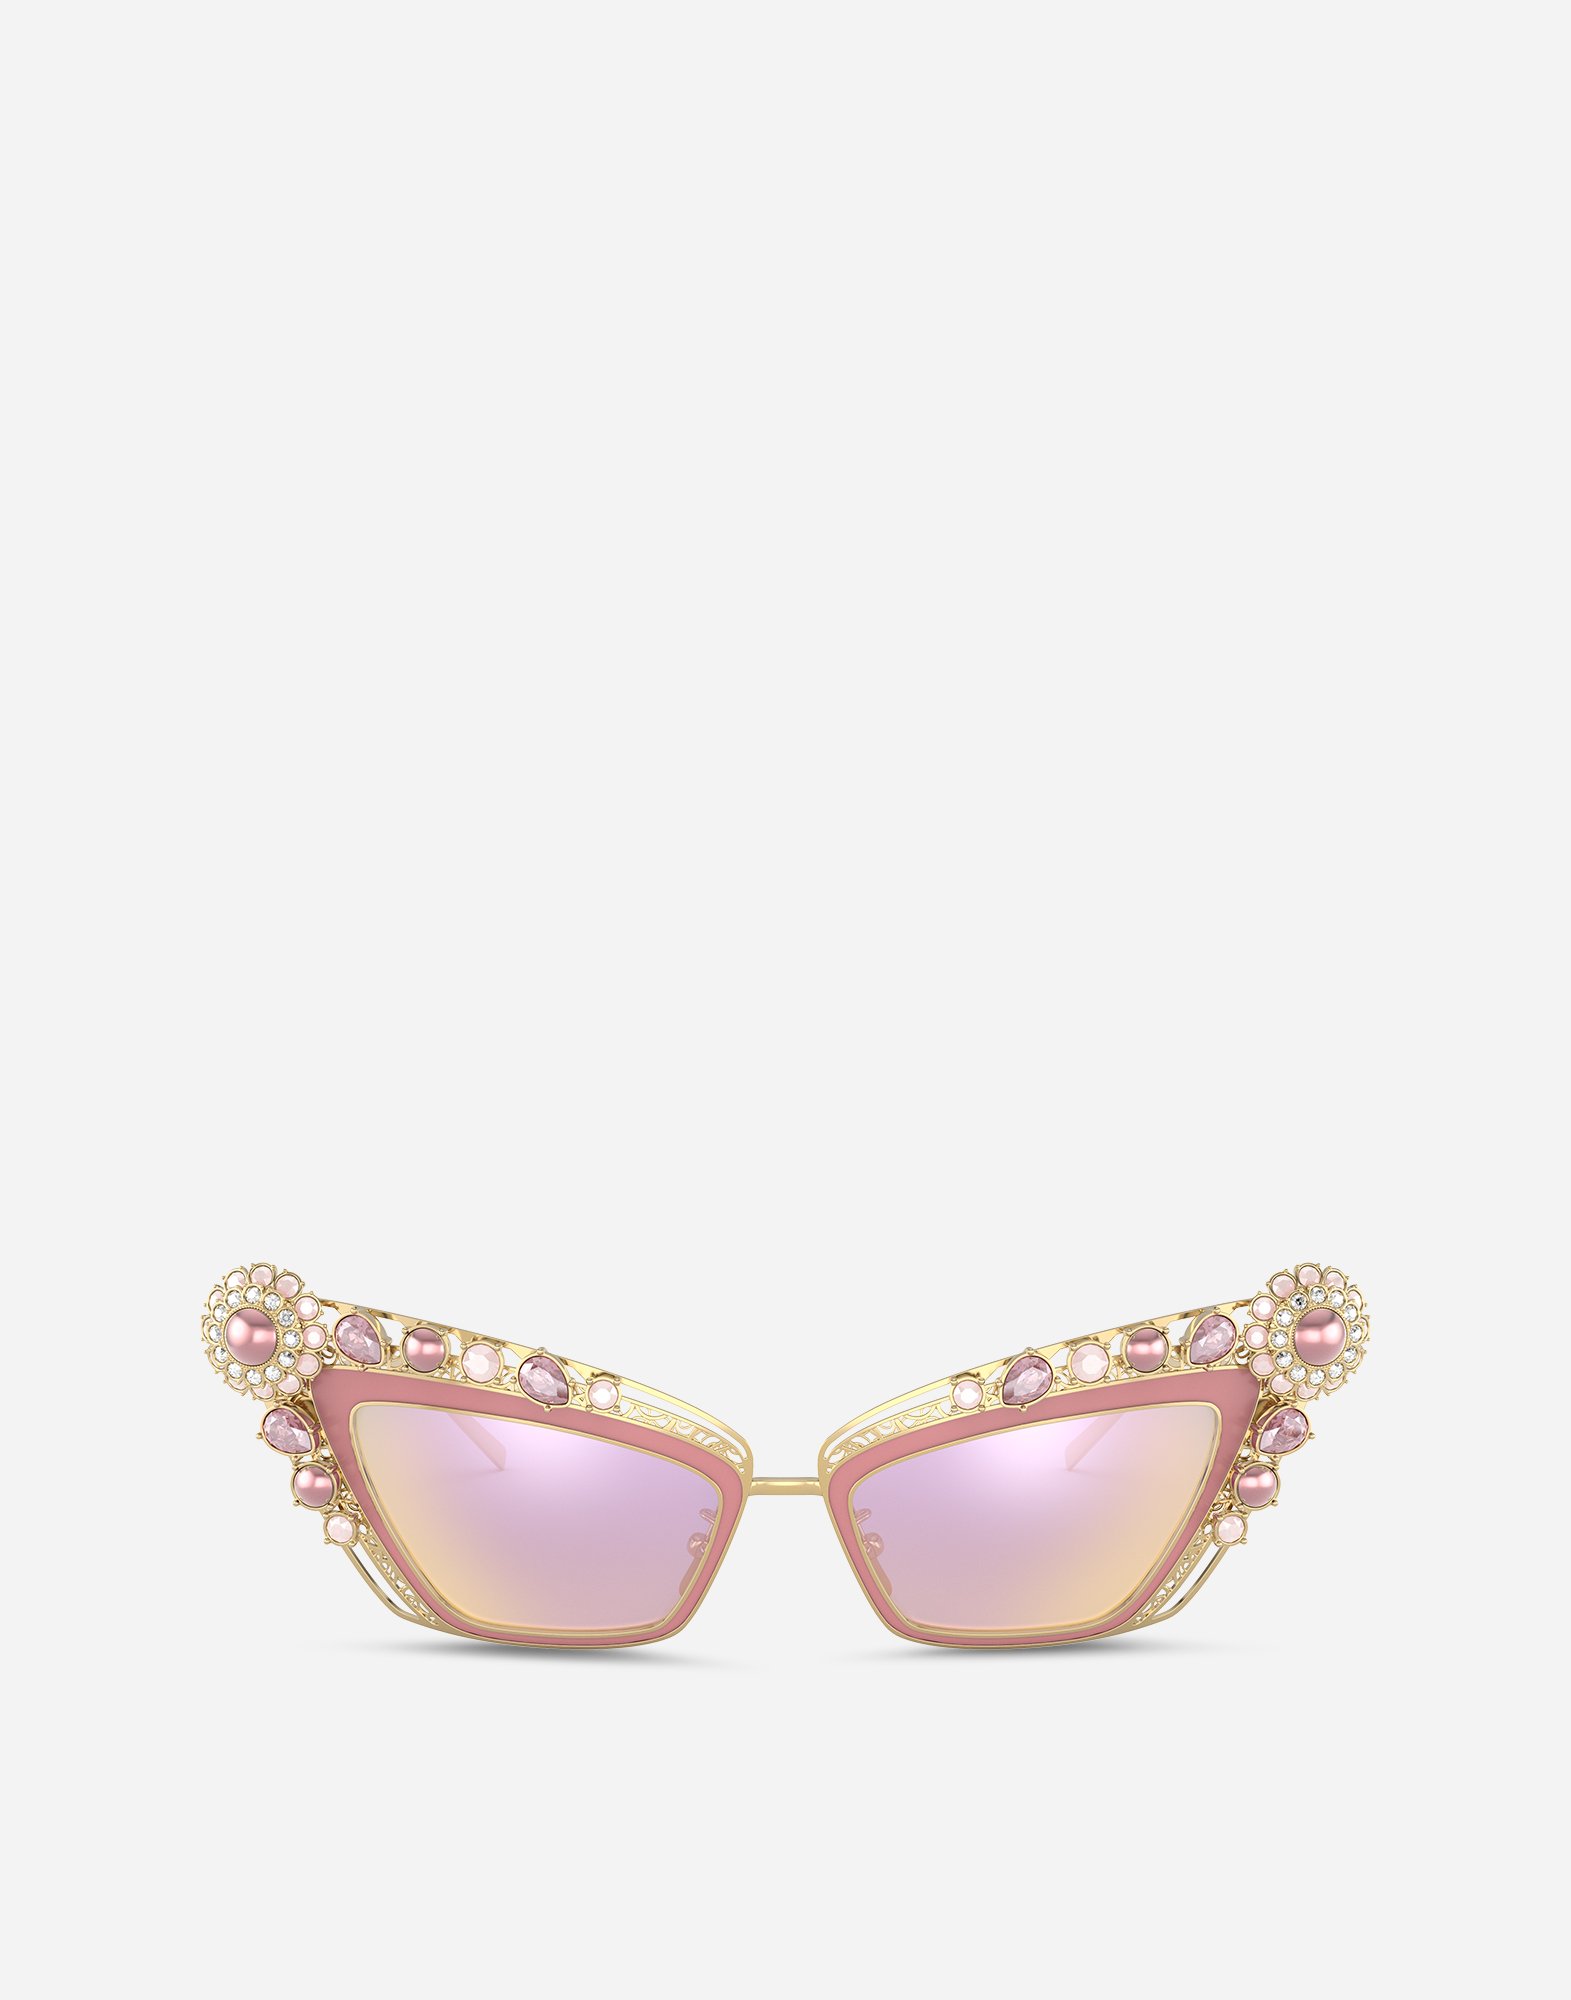 Dolce & Gabbana Christmas Sunglasses